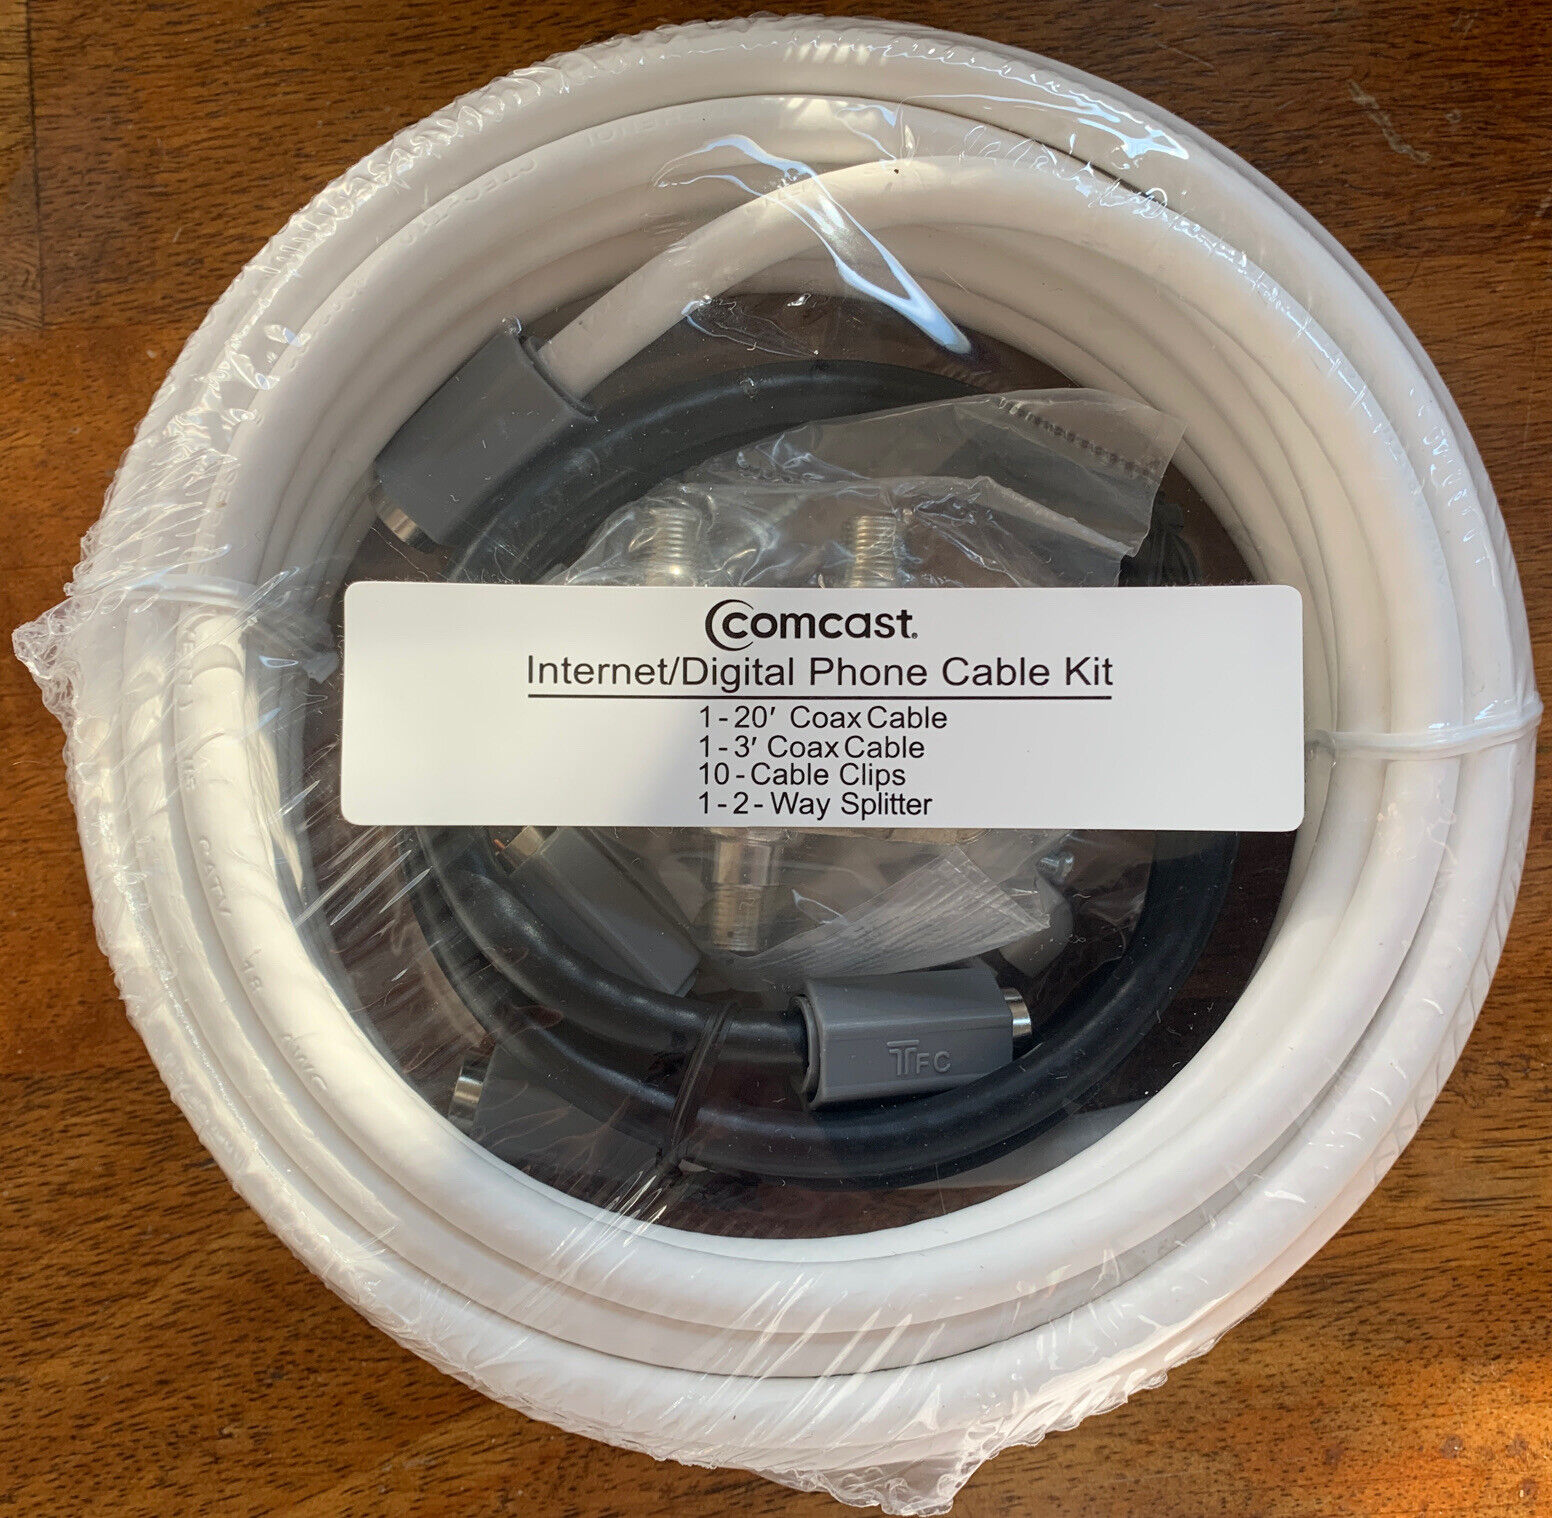 Comcast Internet Digital Phone Cable Kit Sealed